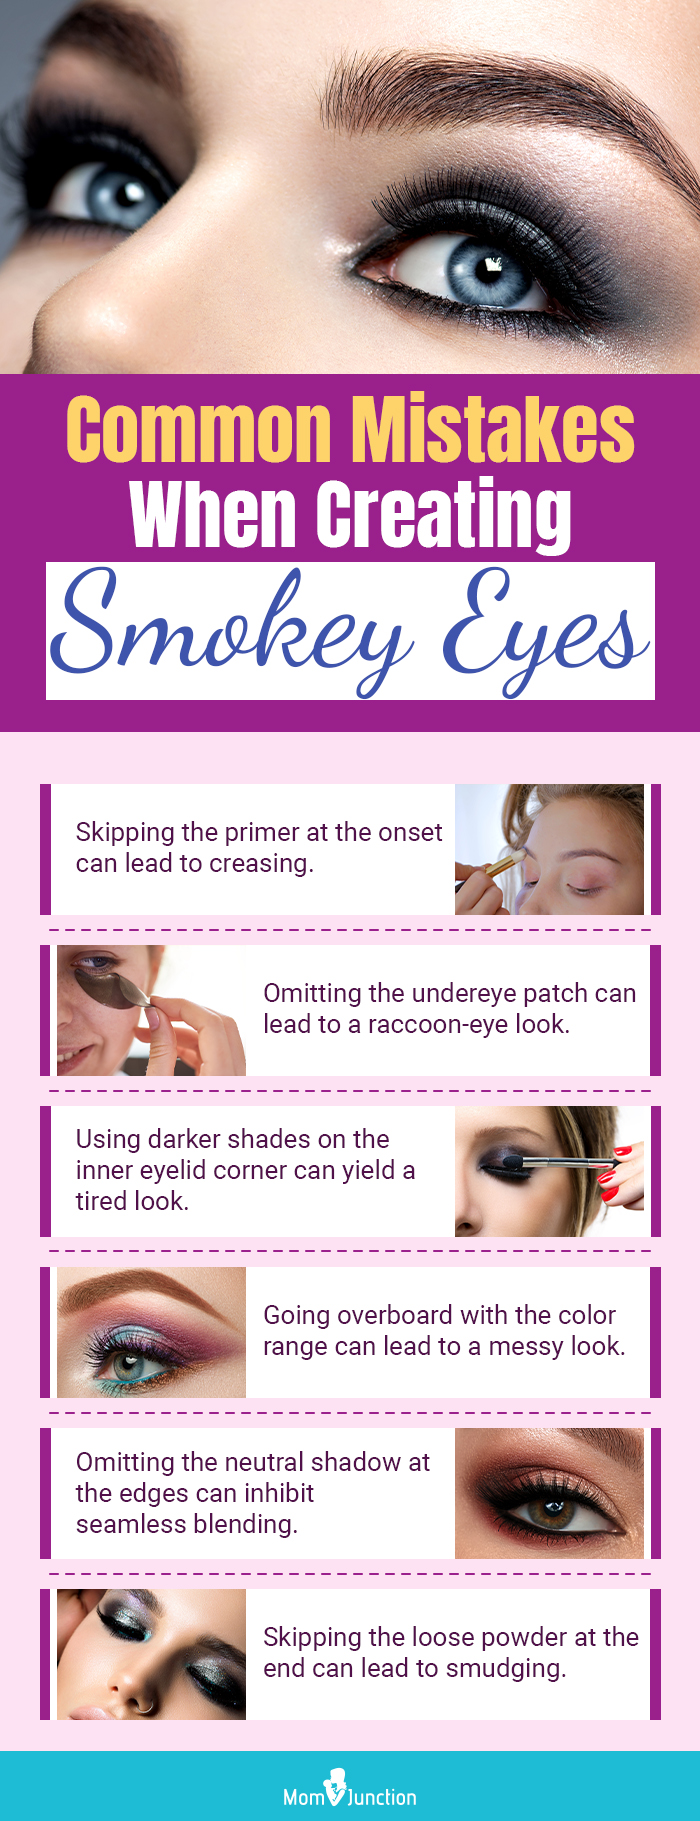 Common Mistakes When Creating Smokey Eyes (infographic)